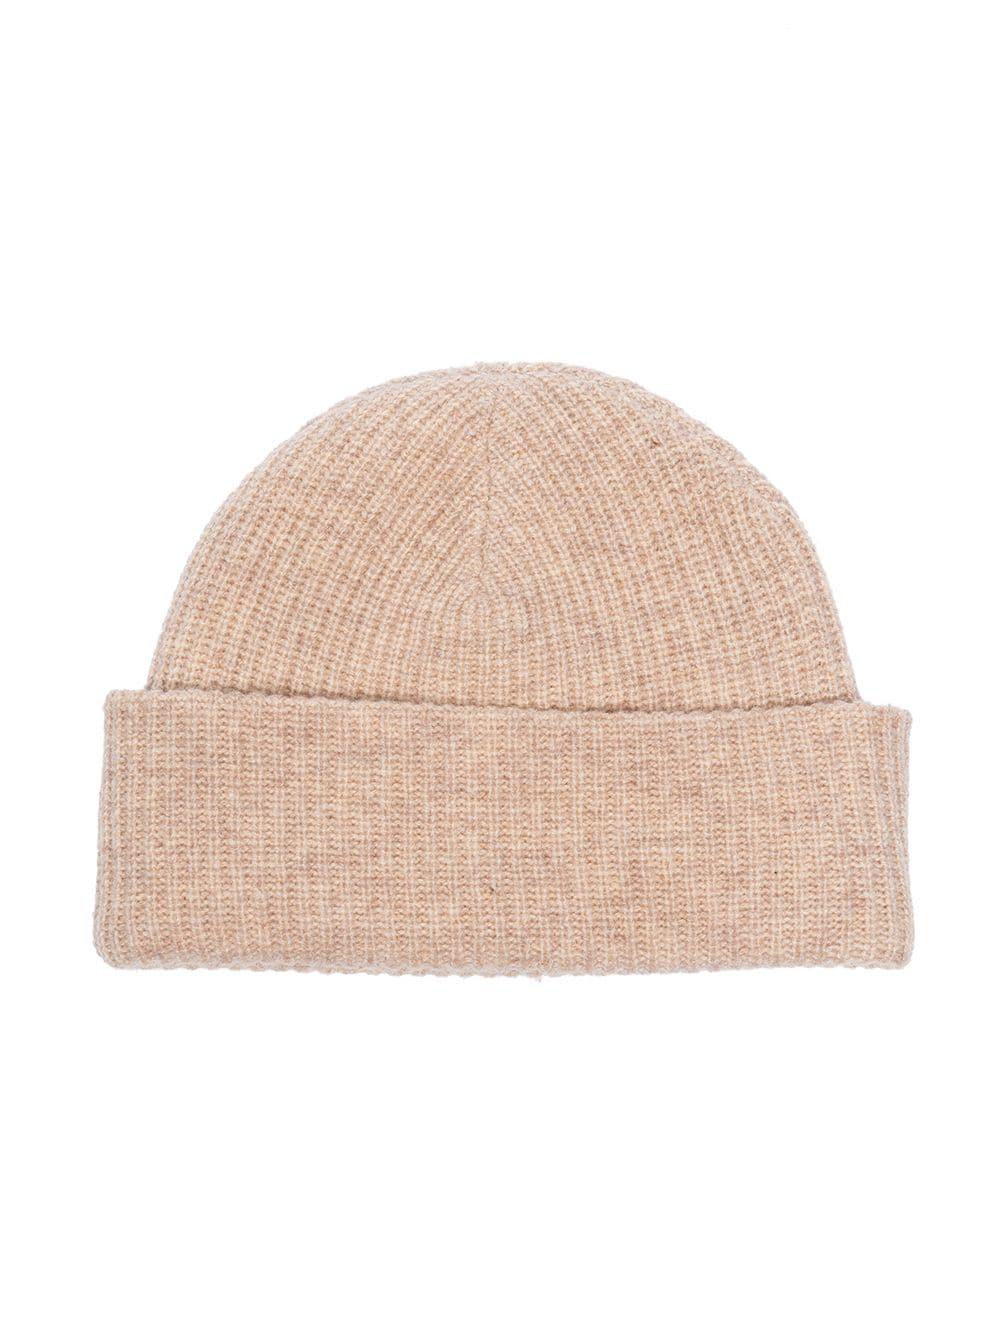 Ganni Wool Knitted Beanie Hat in Beige (Natural) - Lyst